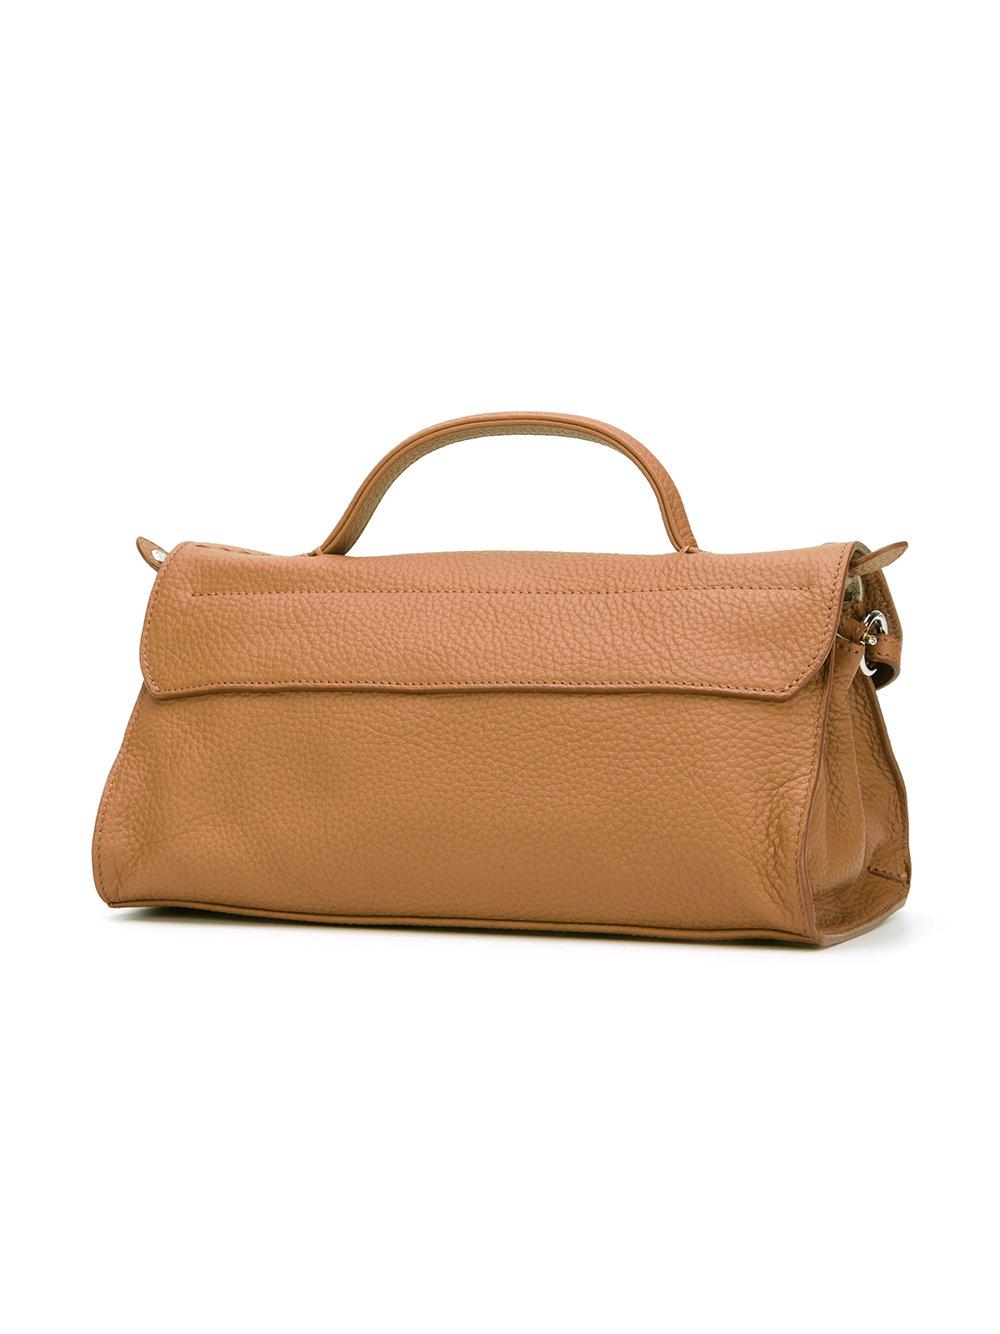 Zanellato Leather Nina Shoulder Bag in Brown - Lyst